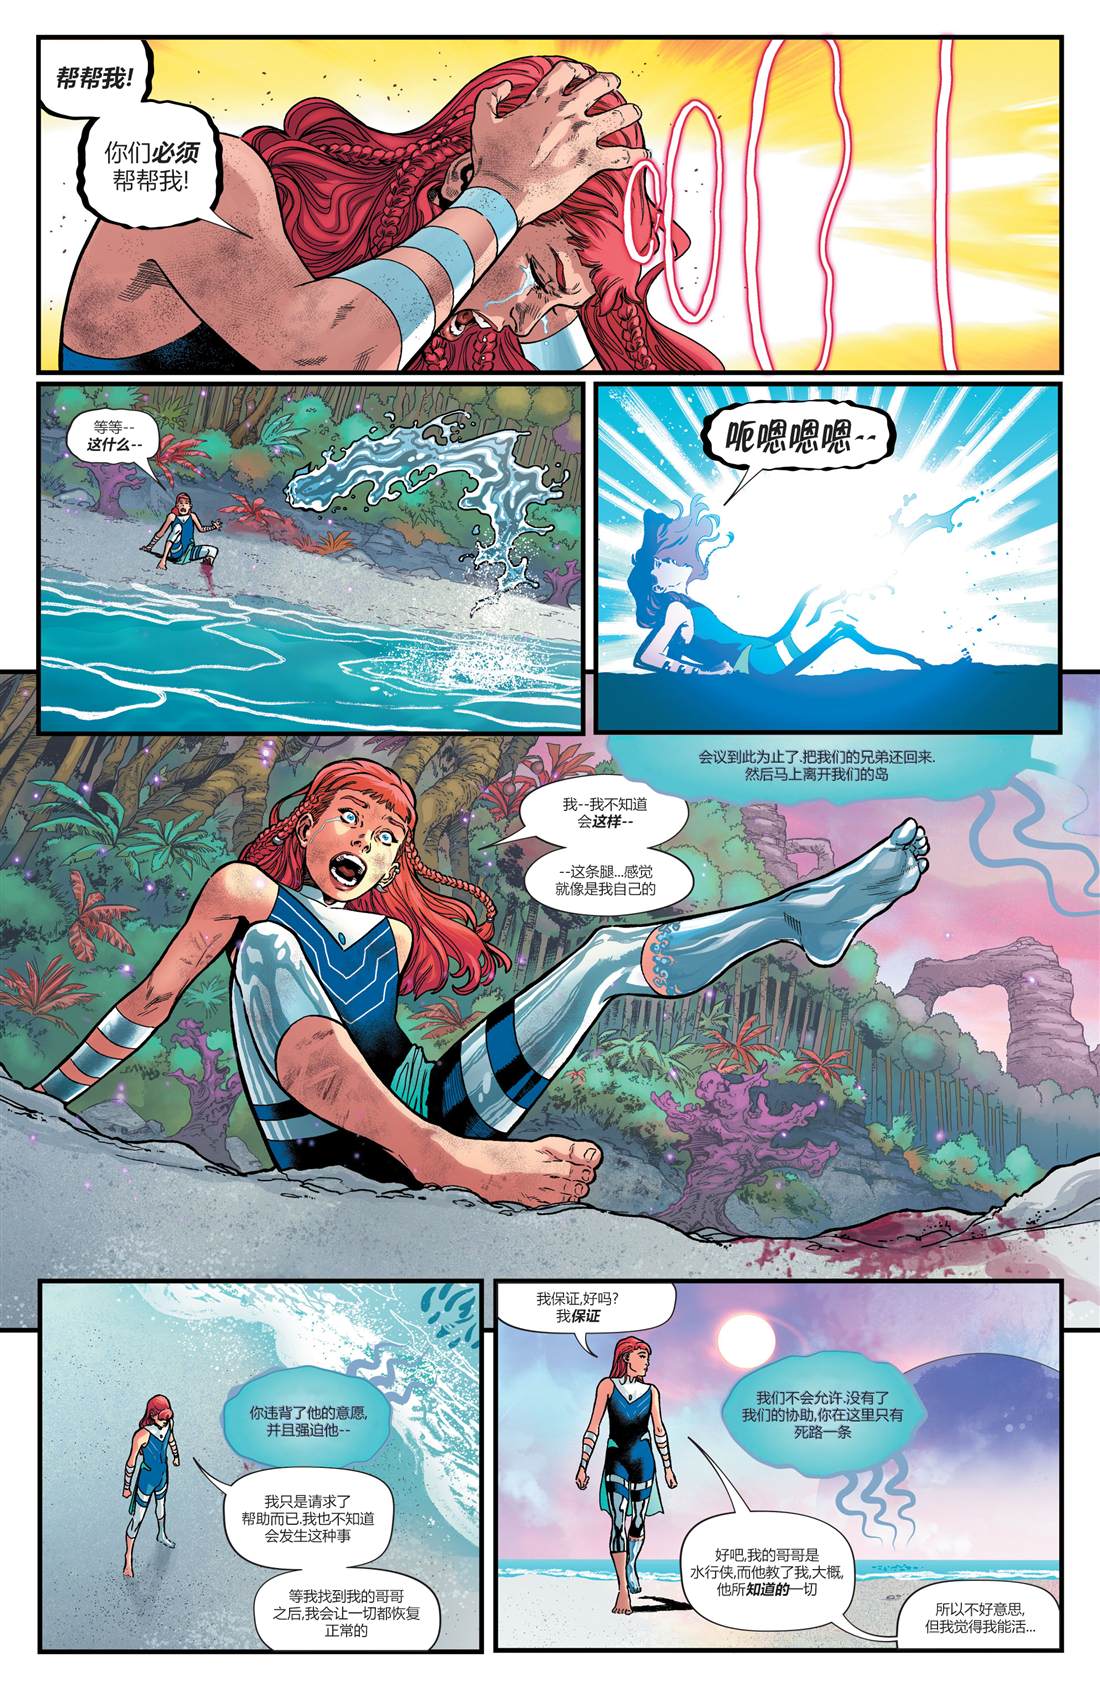 DC未來態 - 水行俠#2 - 5